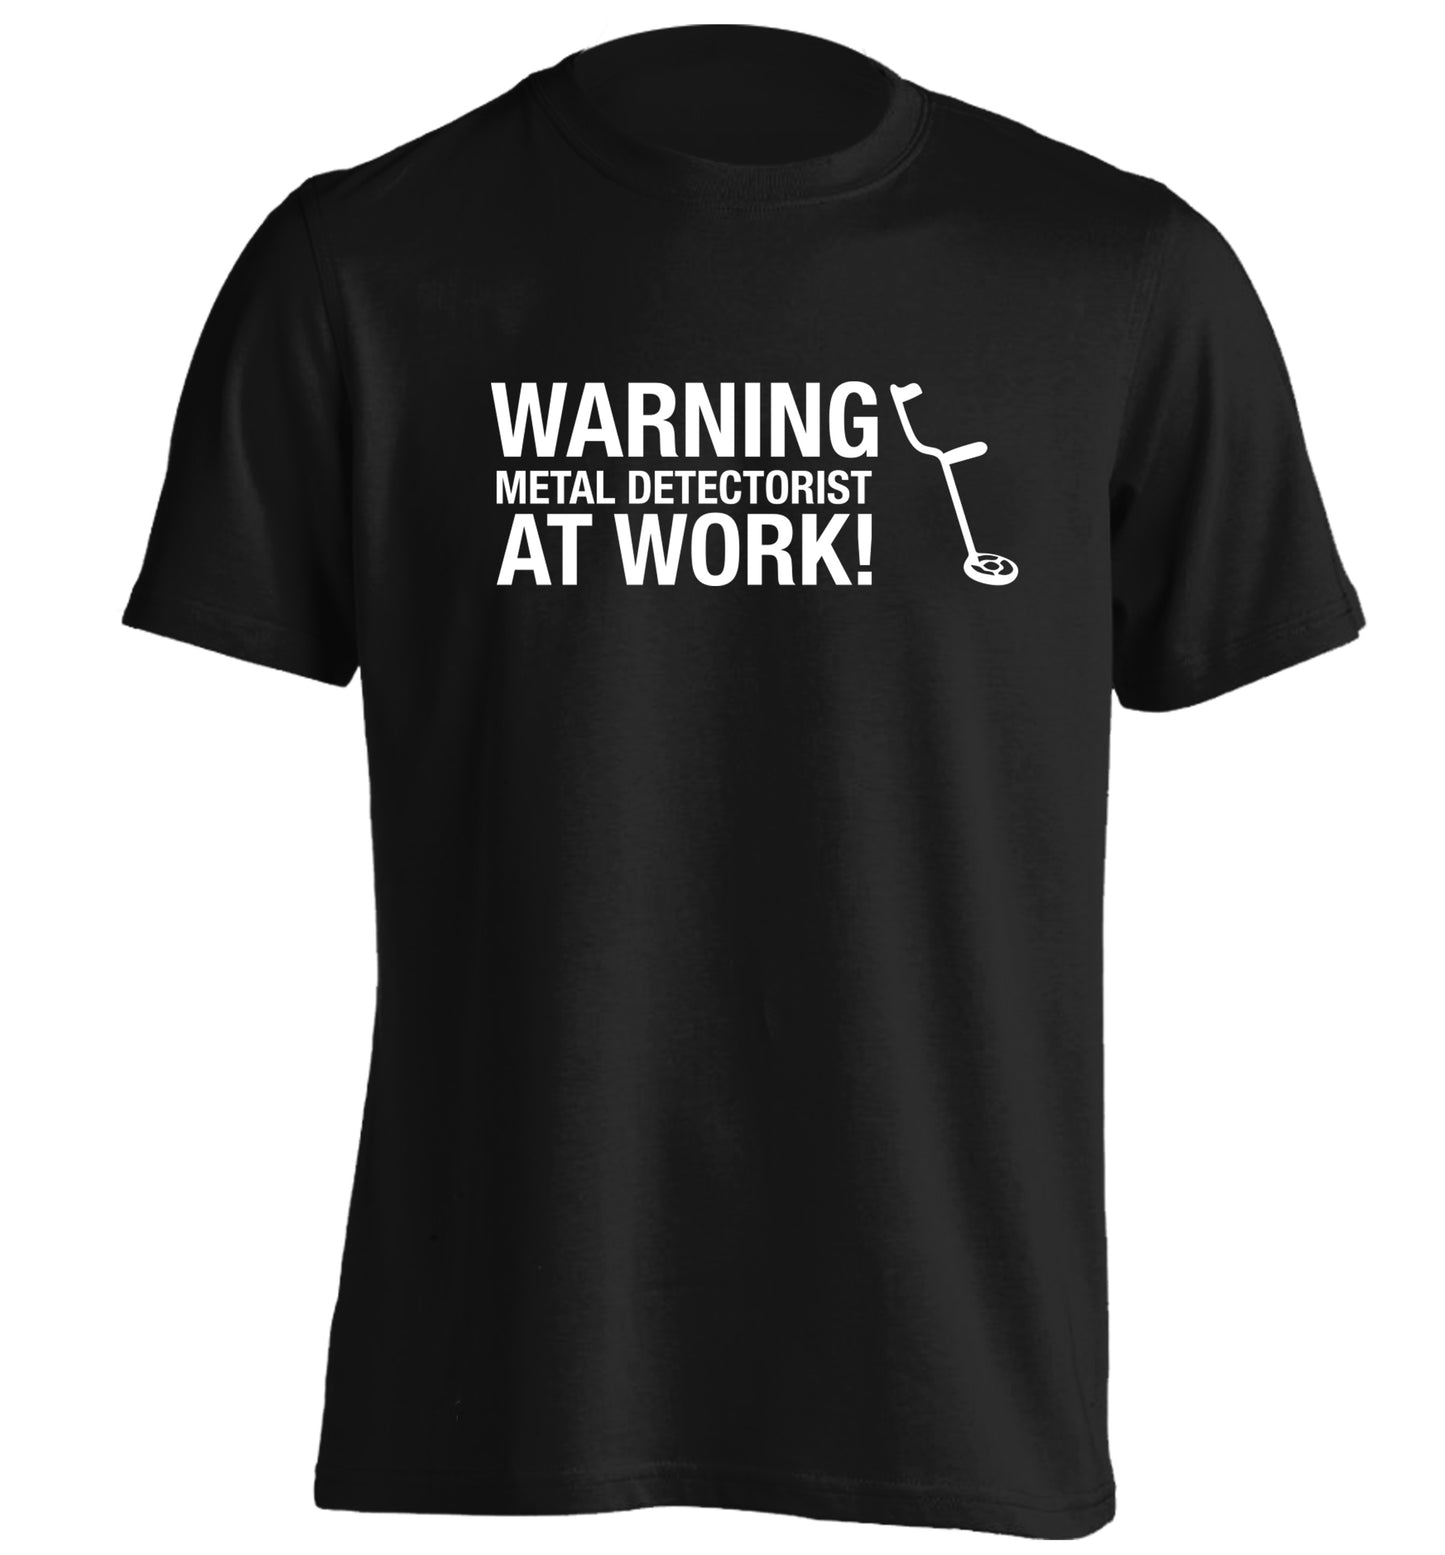 Warning metal detectorist at work! adults unisex black Tshirt 2XL